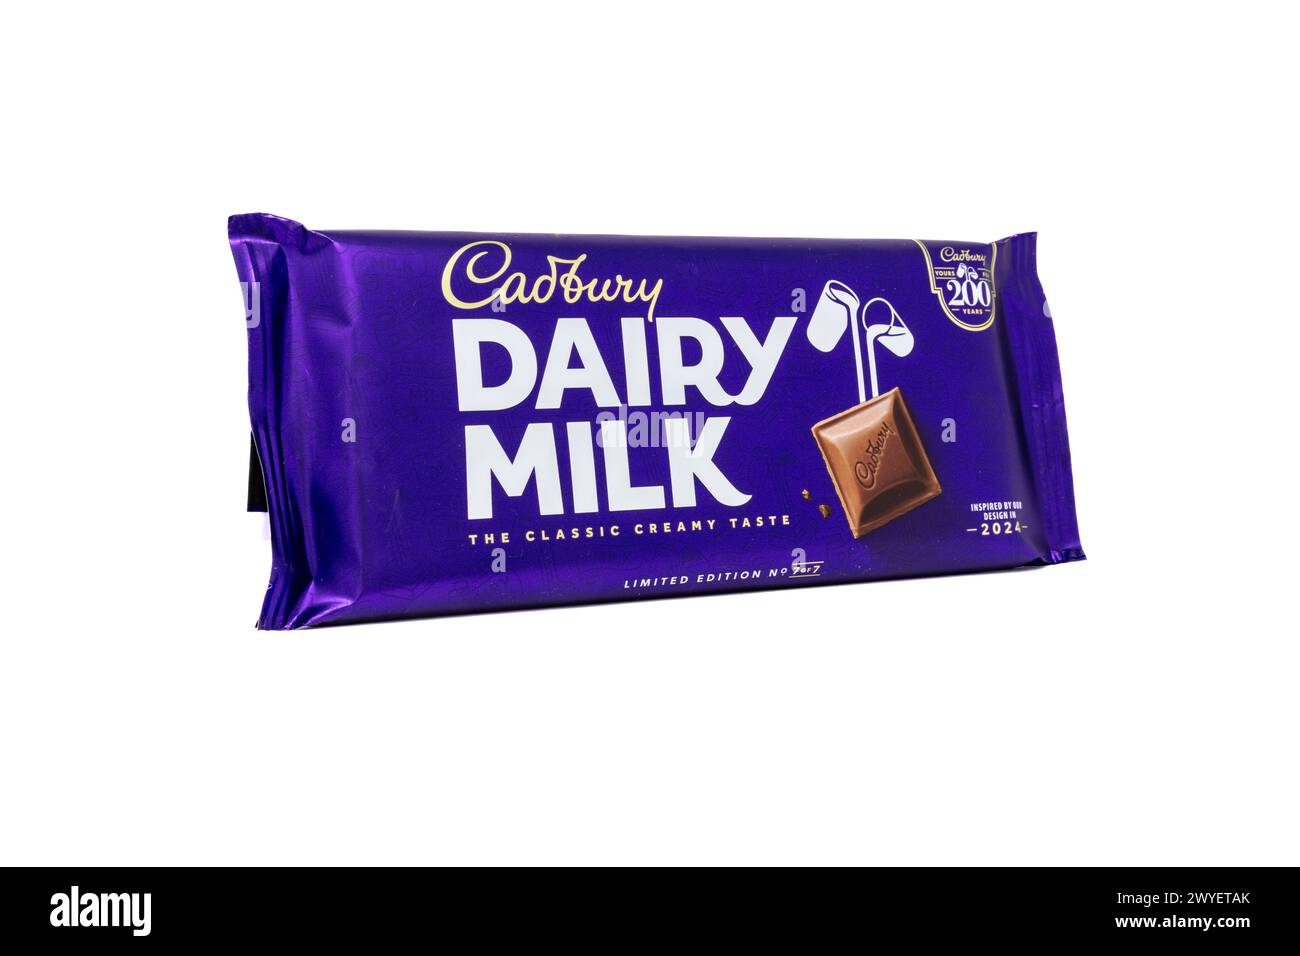 Cadbury Dairy Milk 2024 limited edition wrapper celebrating 200 years of Cadbury’s chocolate. Stock Photo